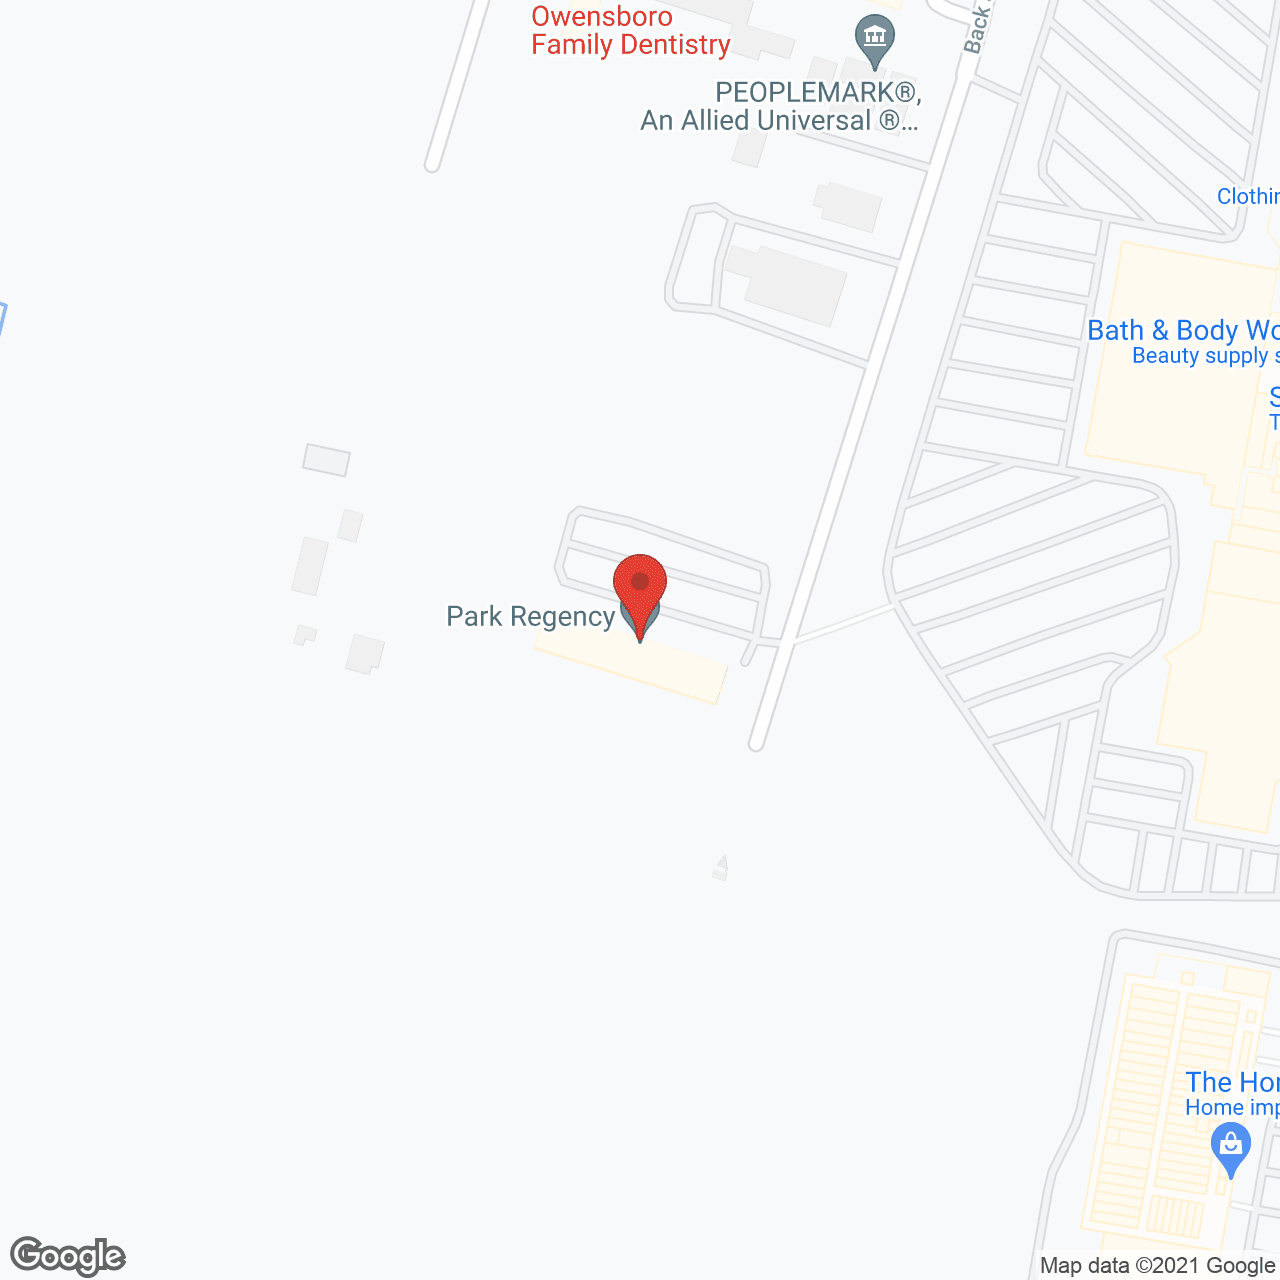 Park Regency in google map